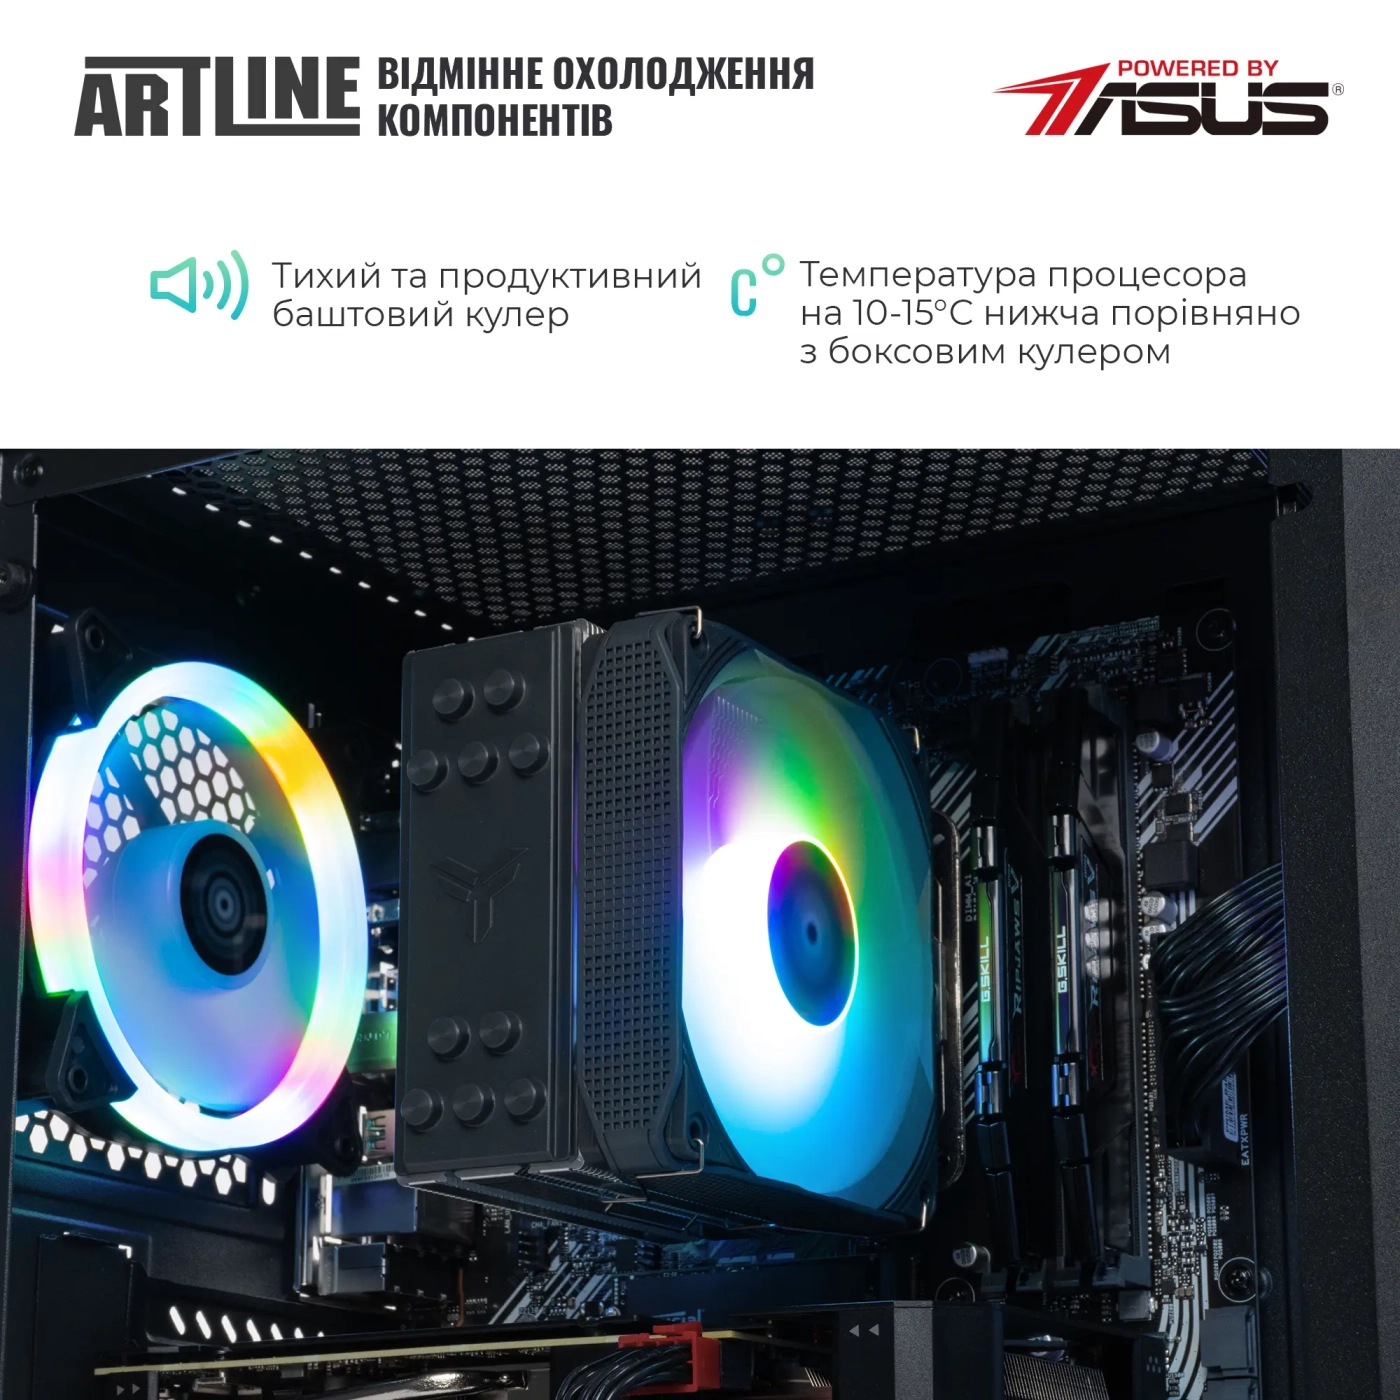 Купить Компьютер ARTLINE Gaming X81 (X81v34) - фото 3